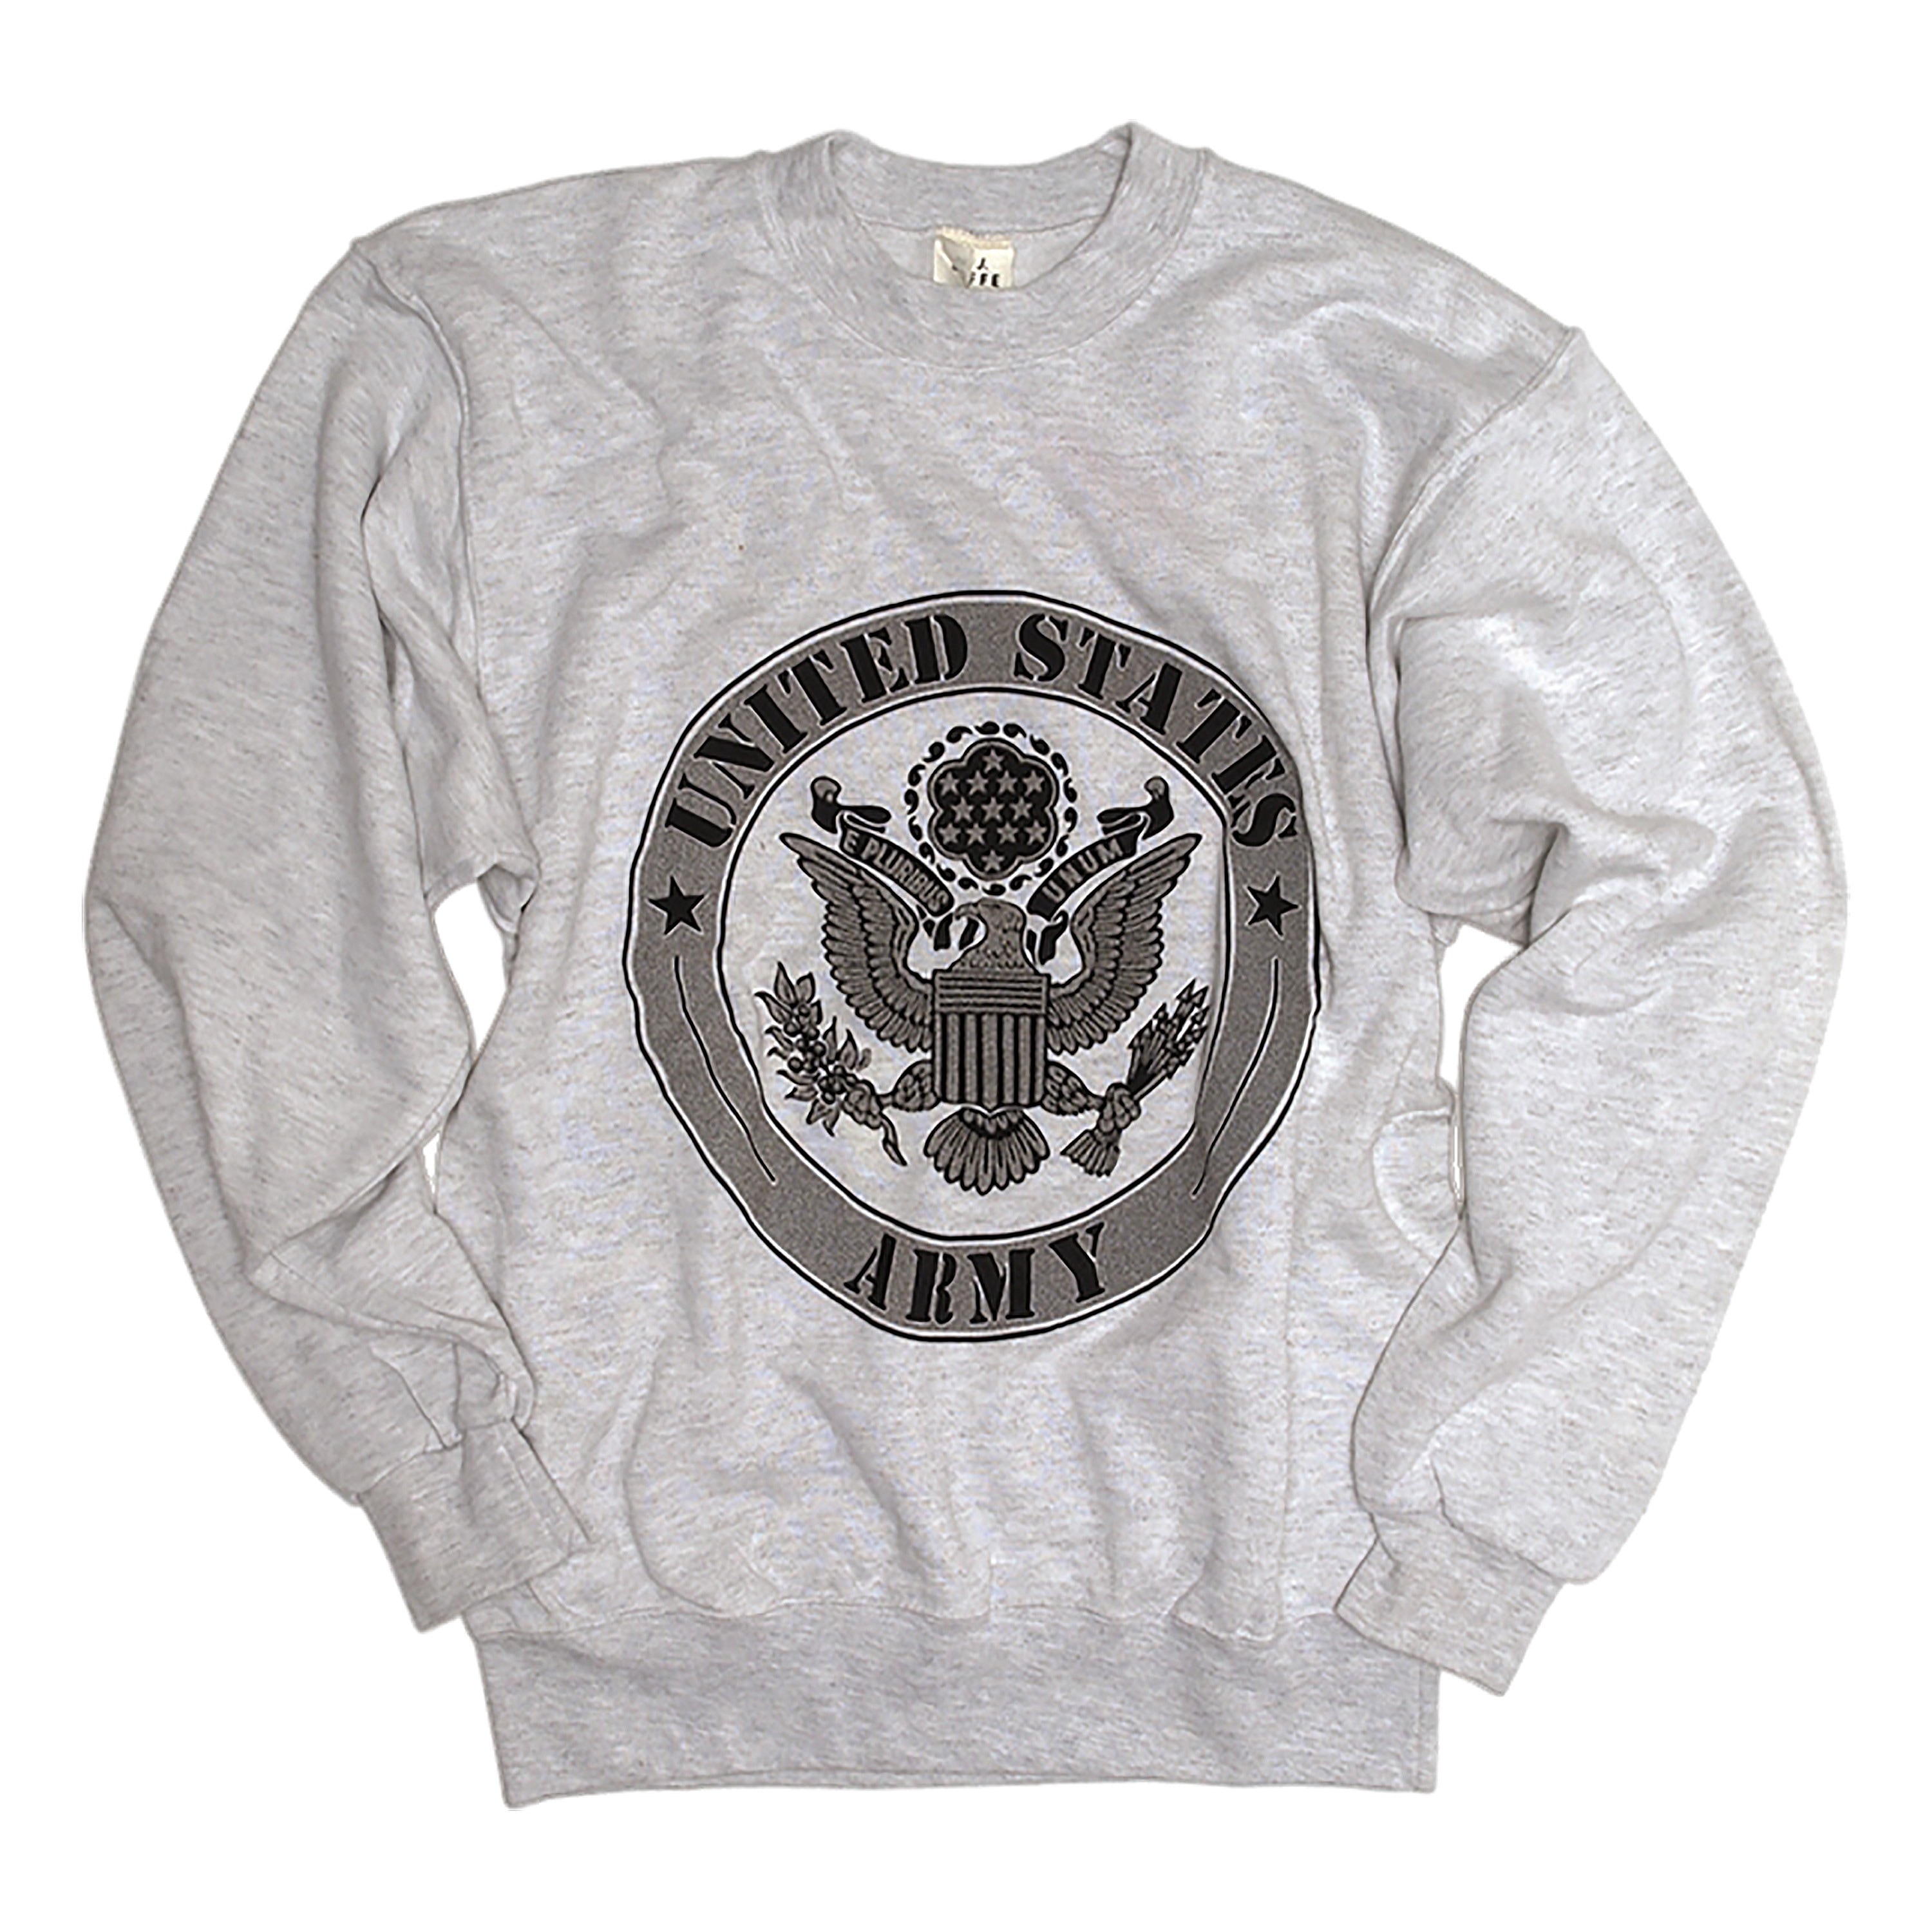 U.S. Sweatshirt Army gray | U.S. Sweatshirt Army gray | Sweatshirts ...